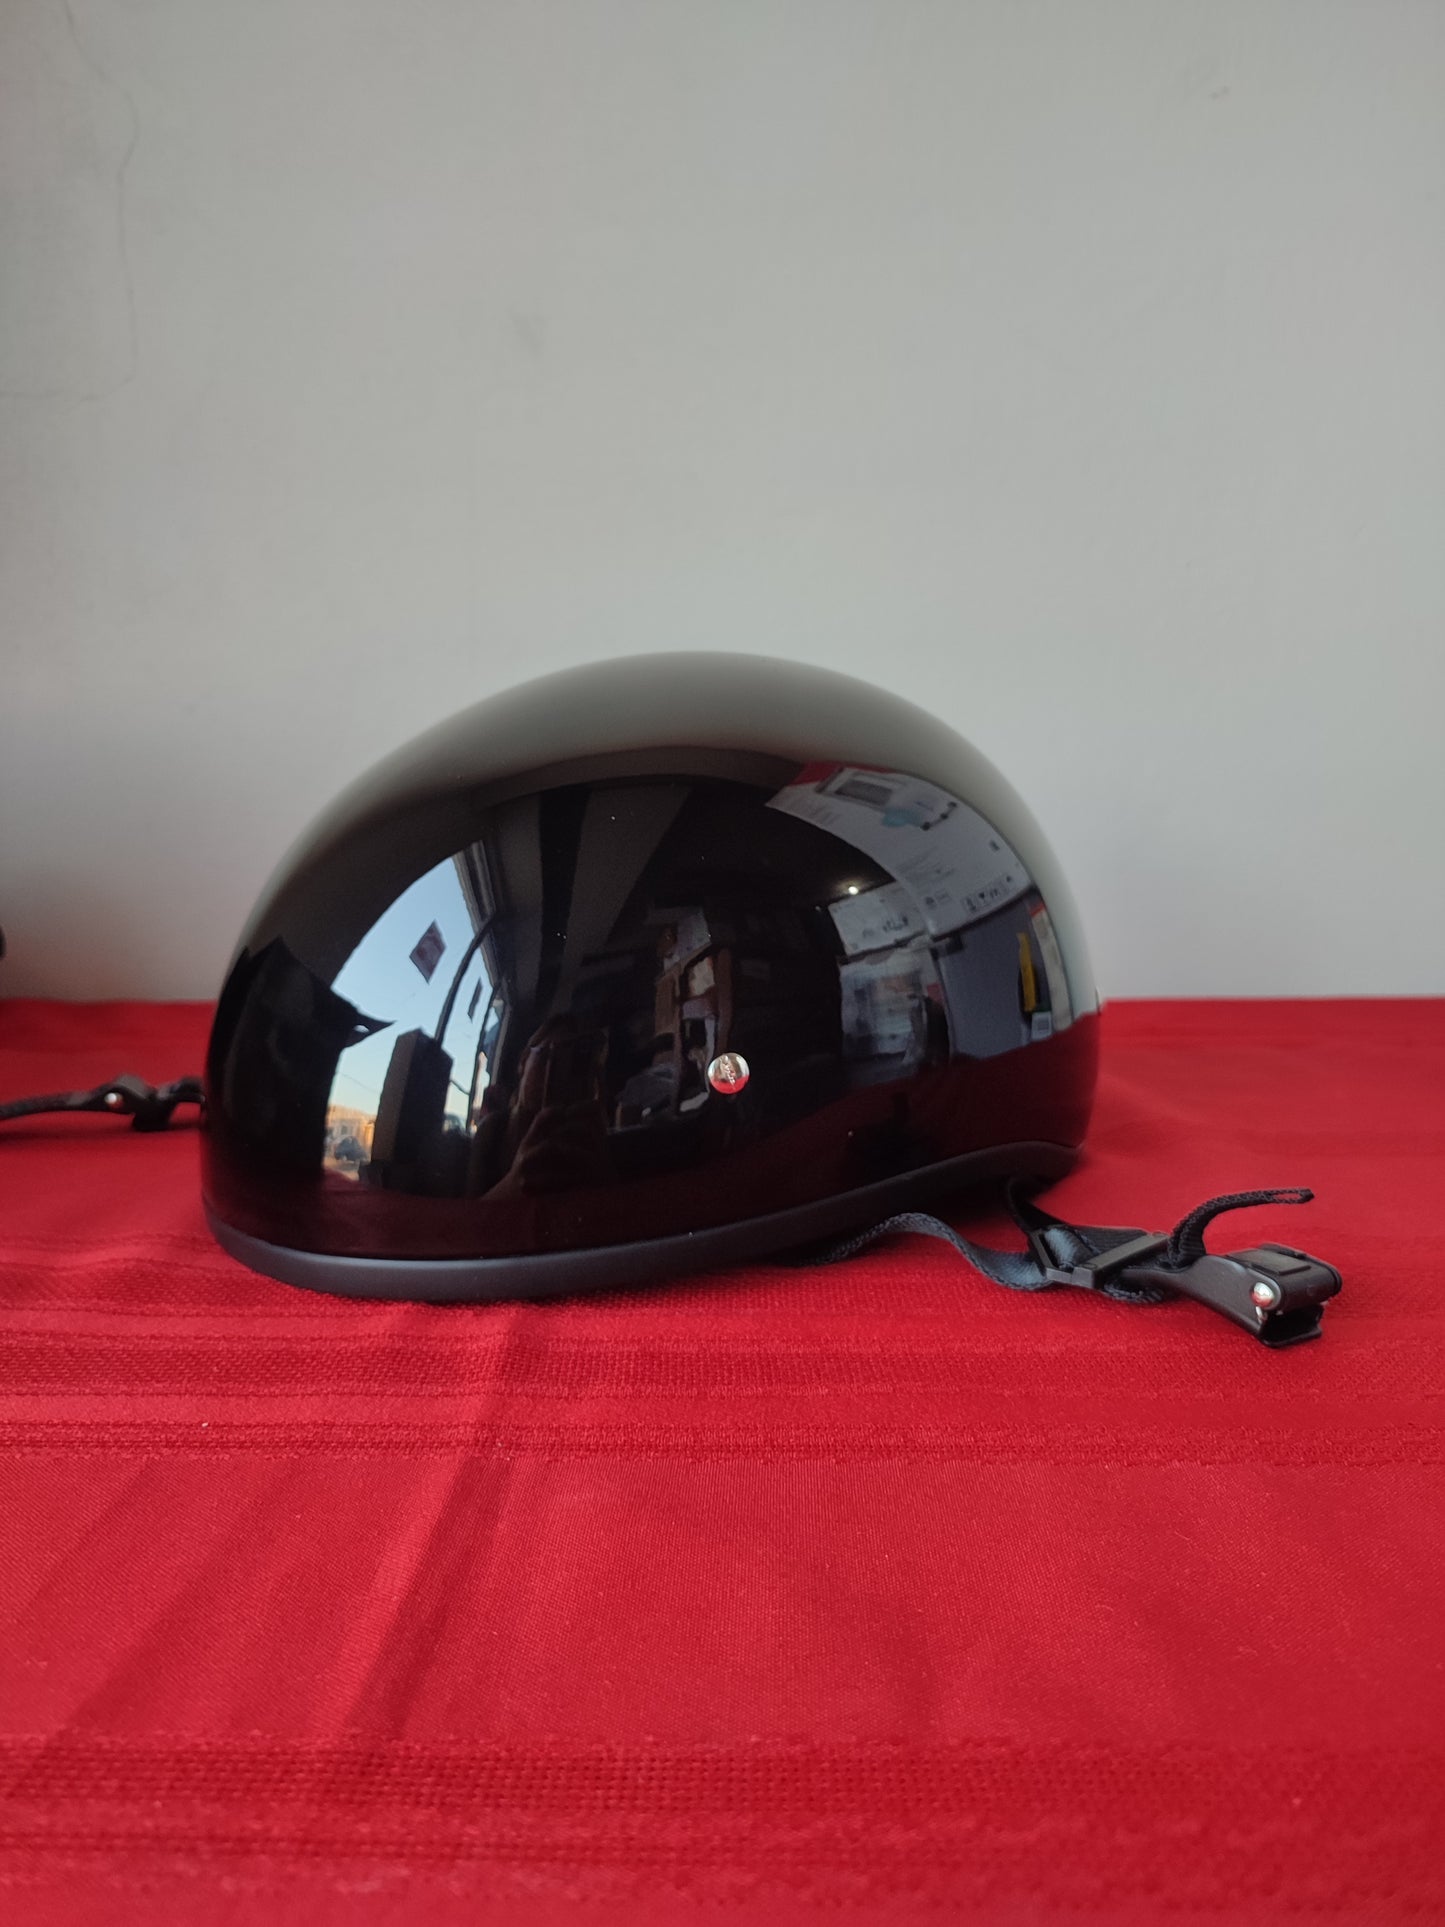 Casco para motocicleta color negro brillante (Talla M) - Daytona Helmets Skull Cap (Nuevo, caja abierta)